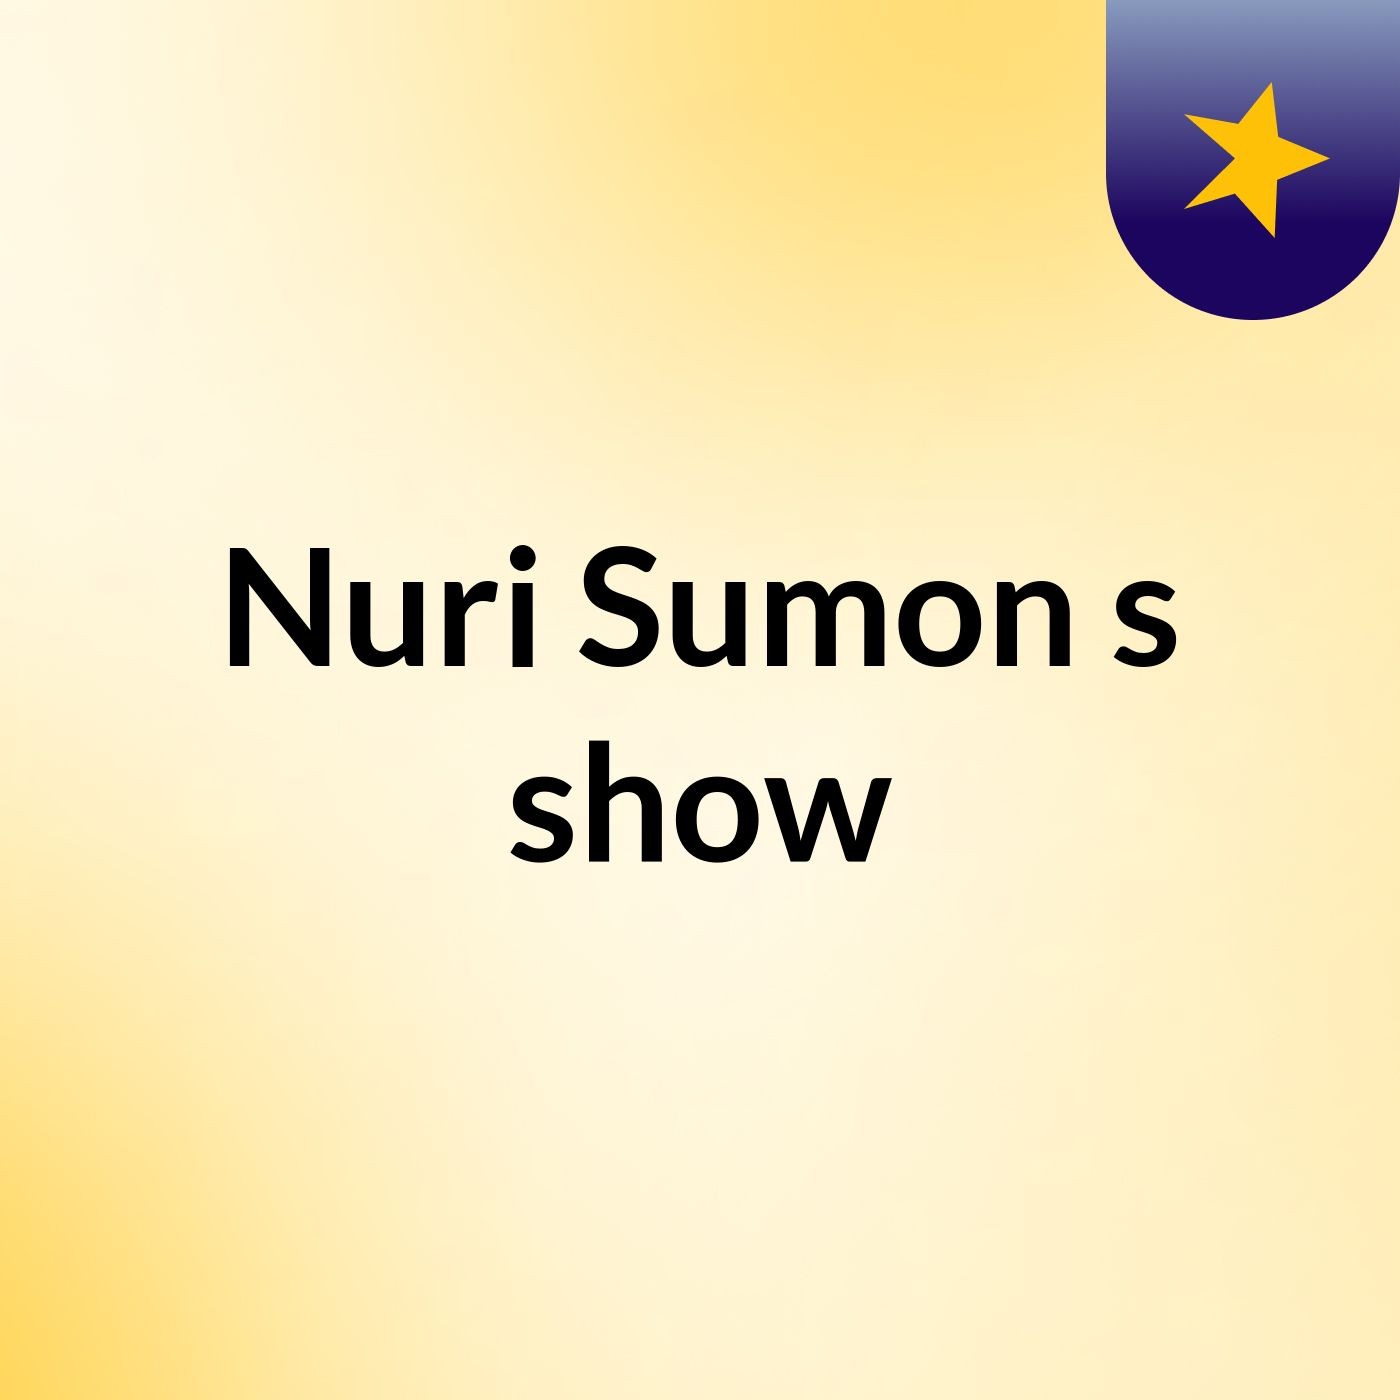 Nuri Sumon's show